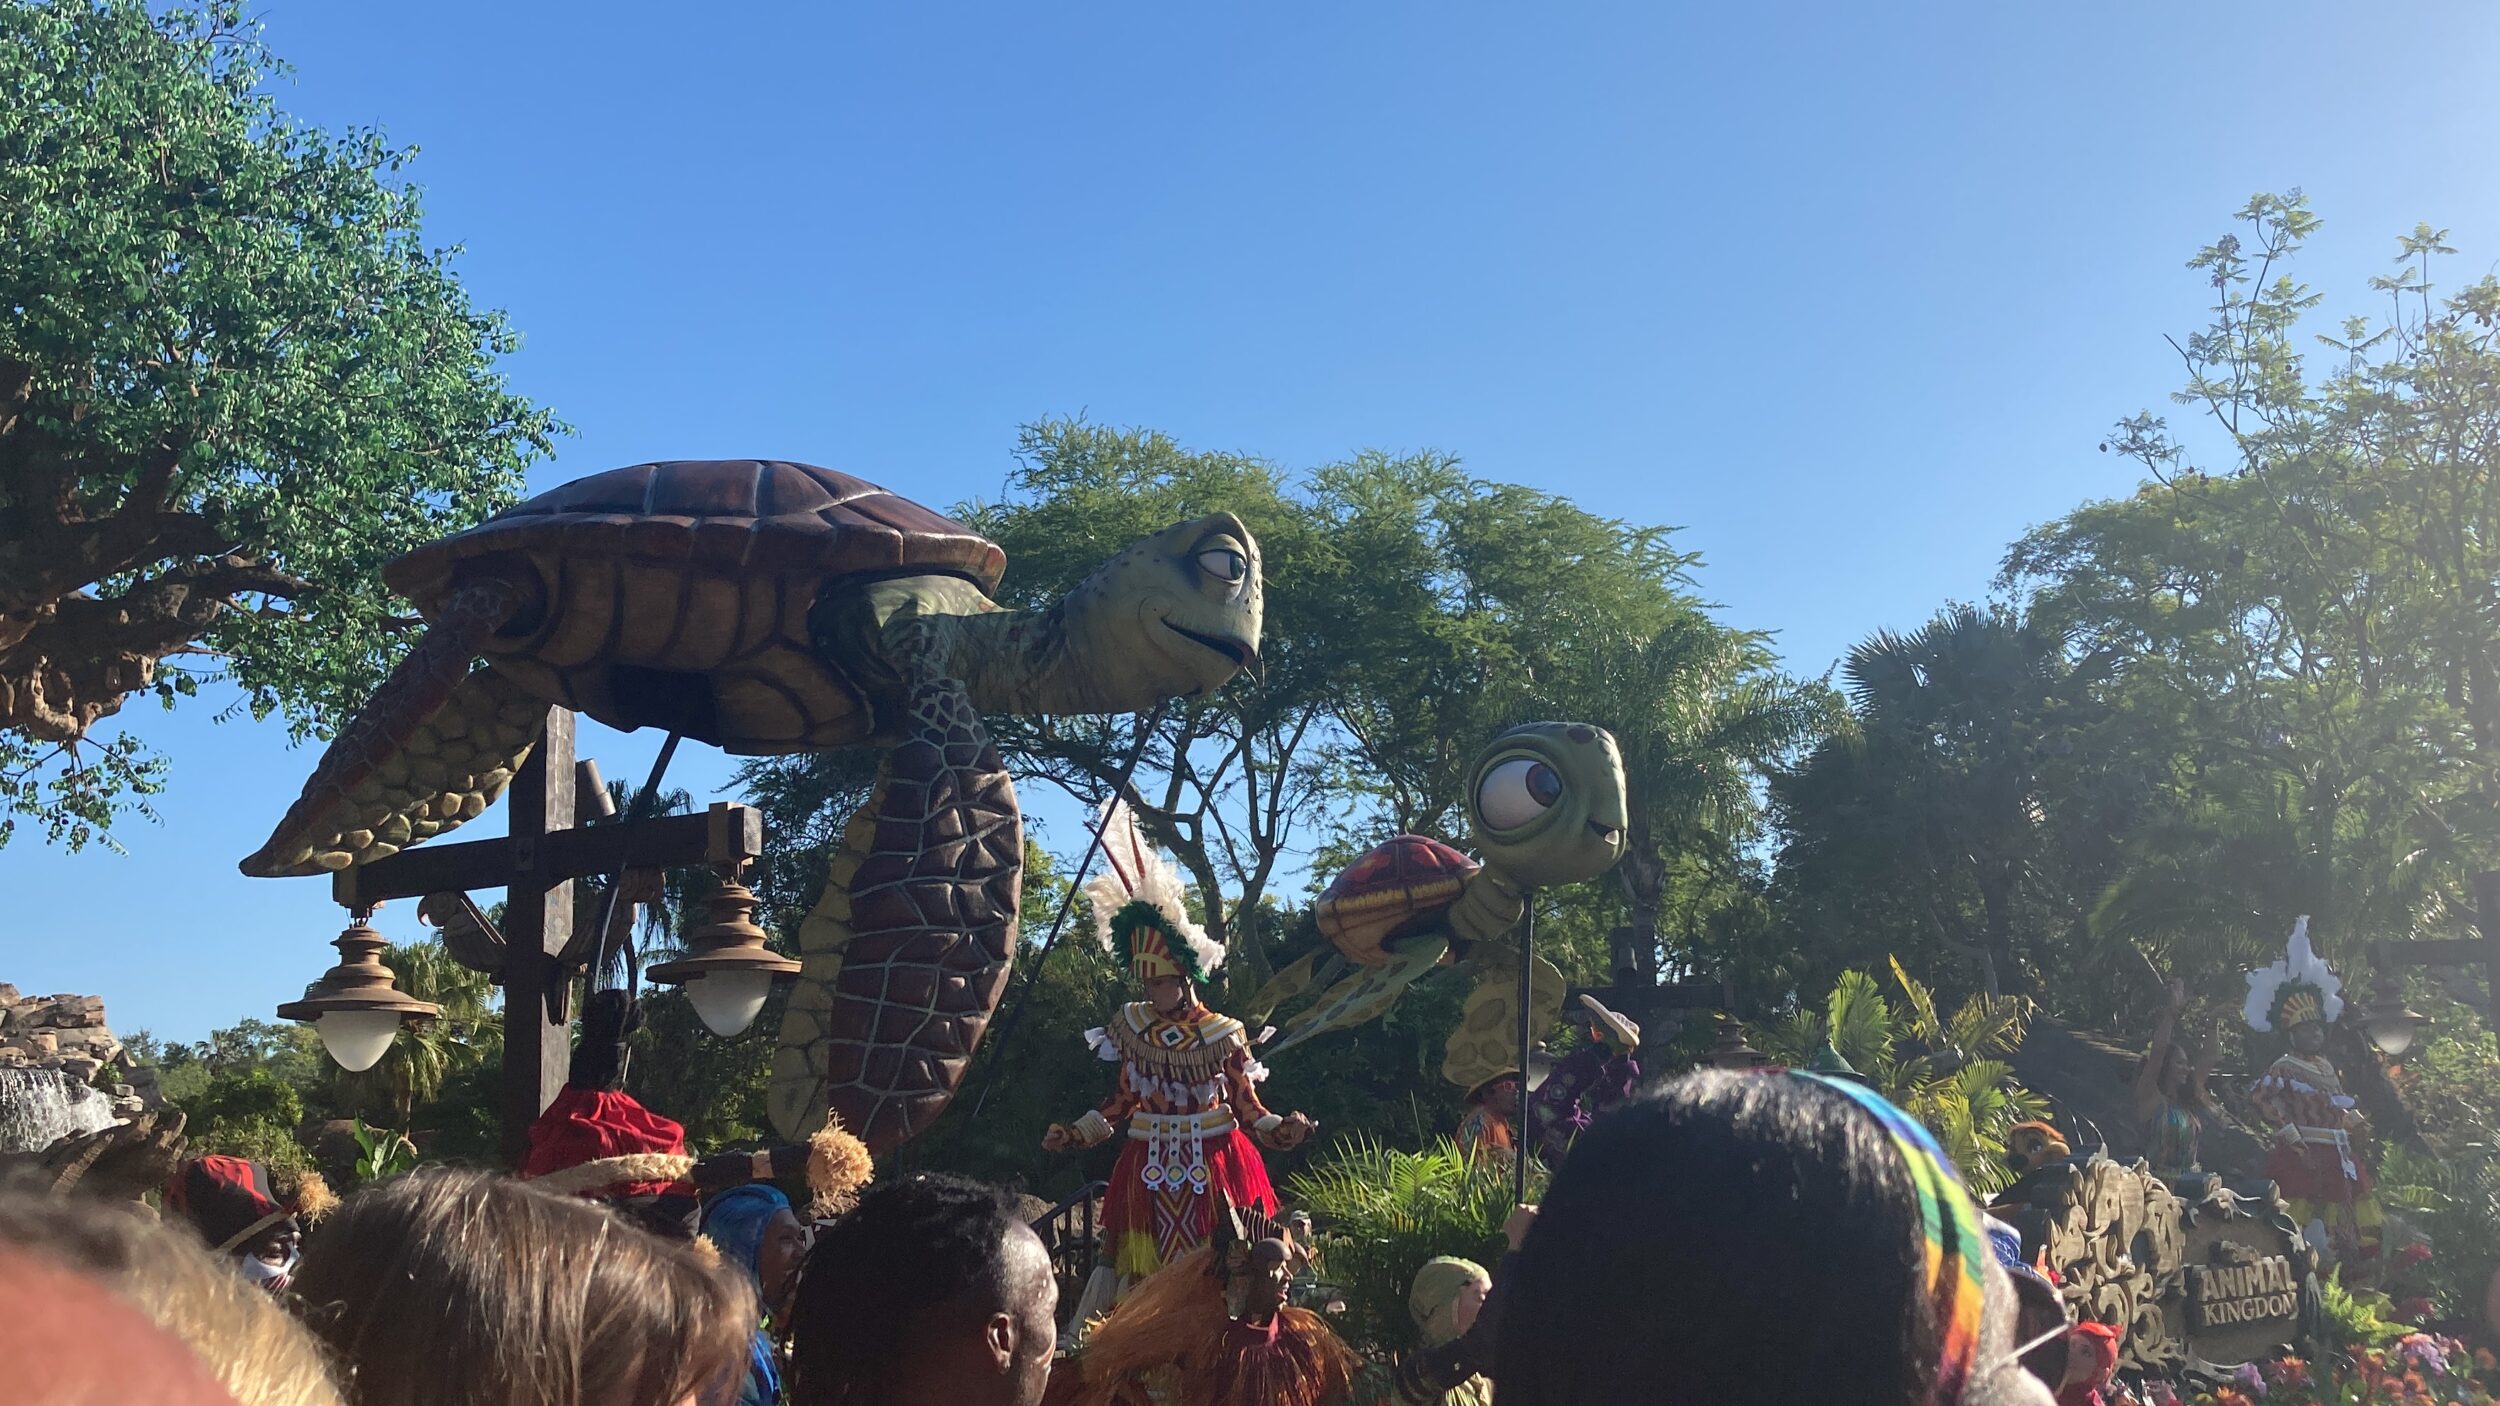 animal kingdom disney's characters turtle trees crowds heads